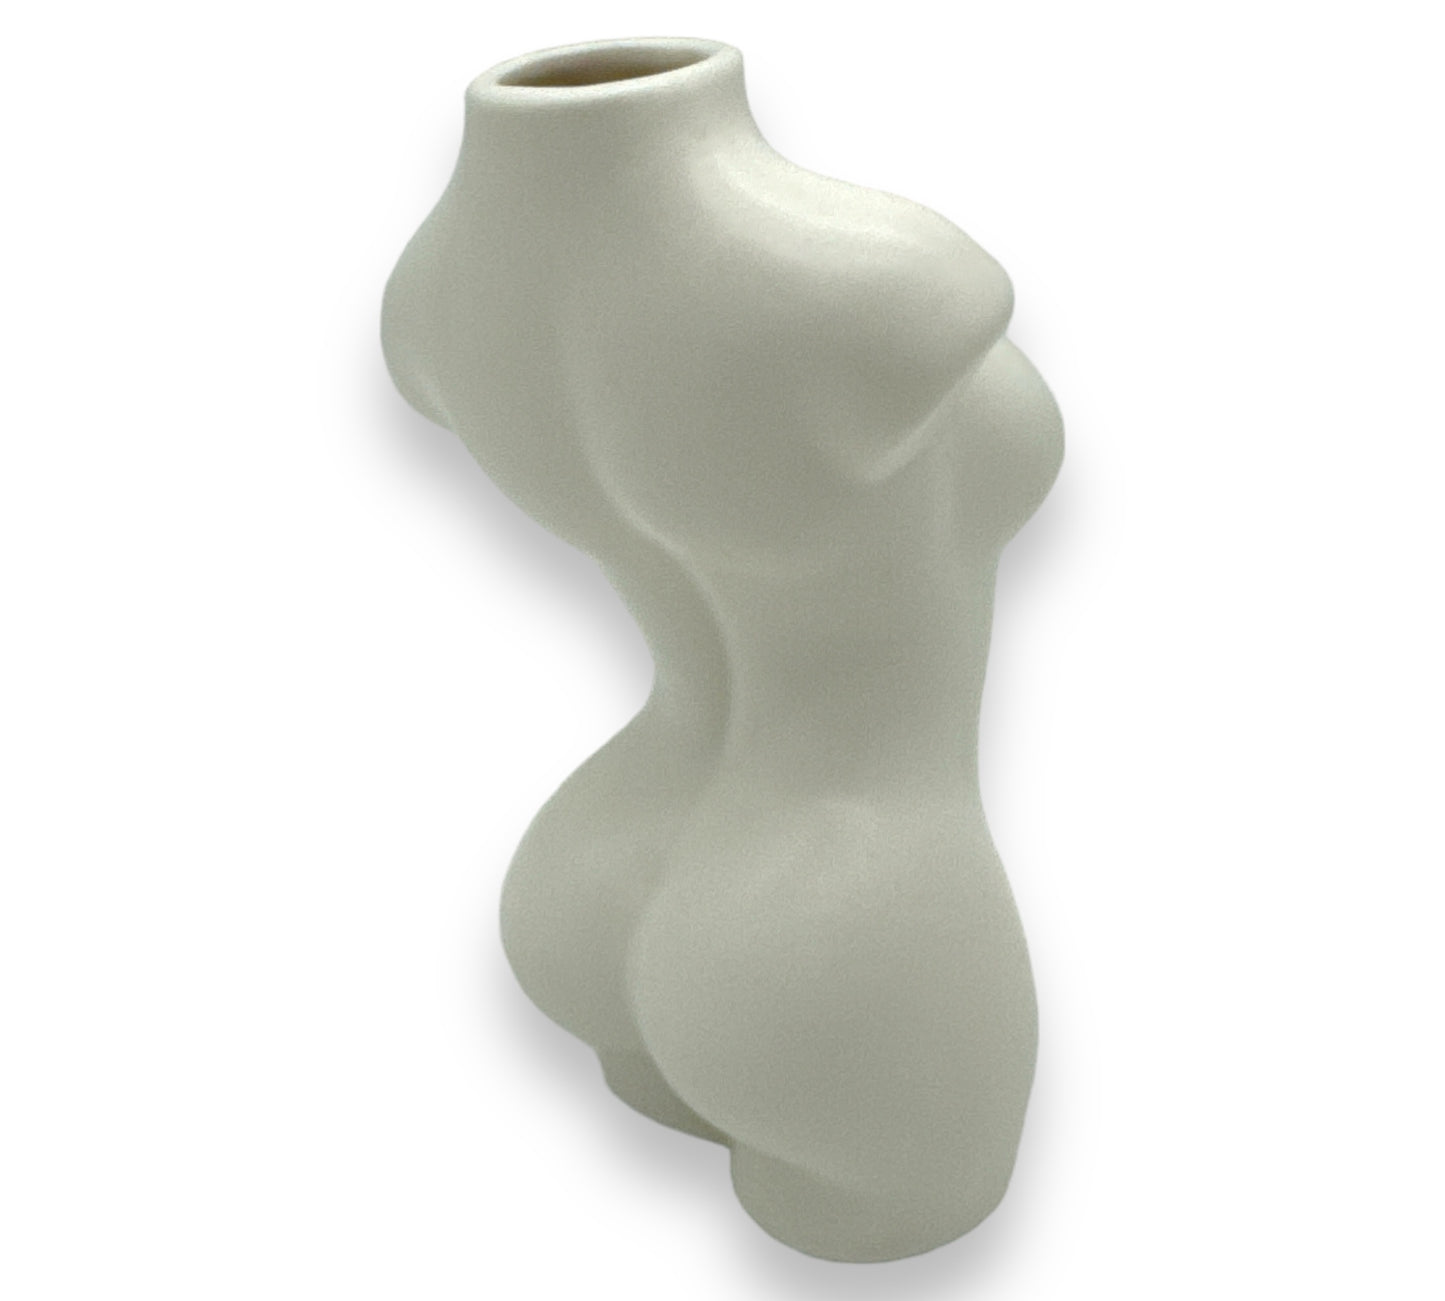 Kinky Pleasure - T029 - Woman Body Vase - White - 12x5.5cm